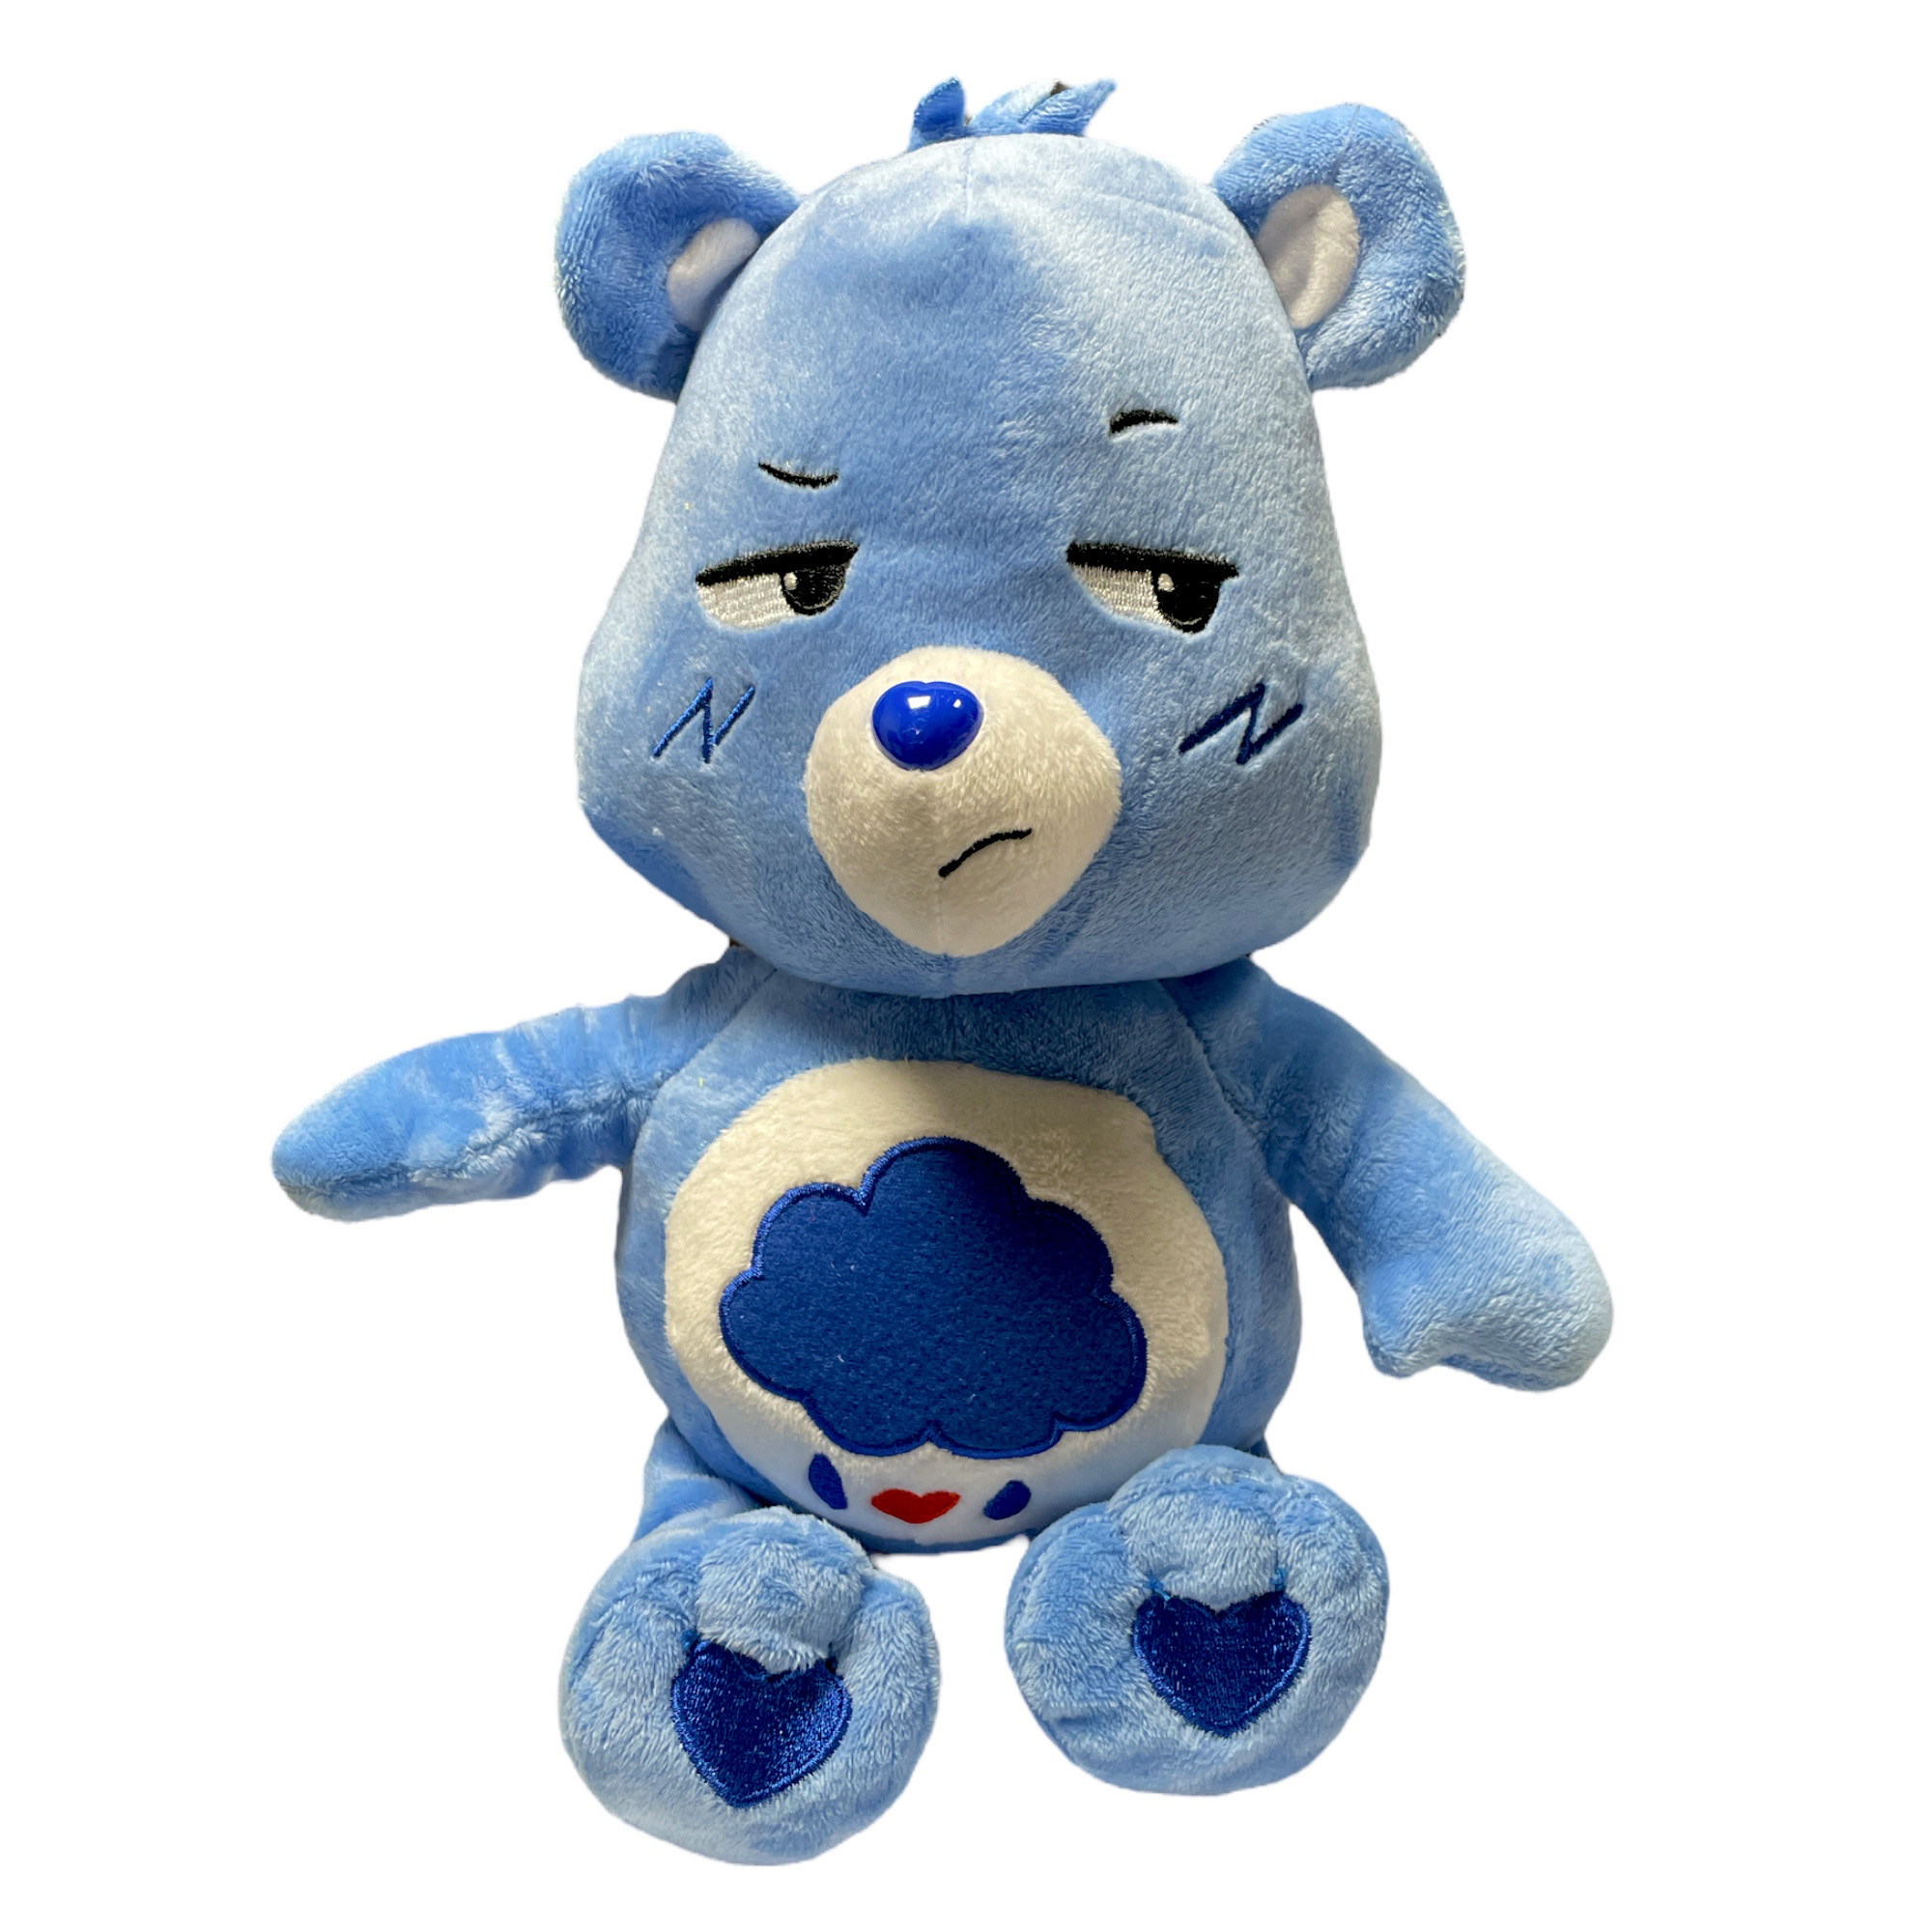 Brummbärchi - Grumpy Bear Plüschfigur (28 cm) - Glücksbärchis